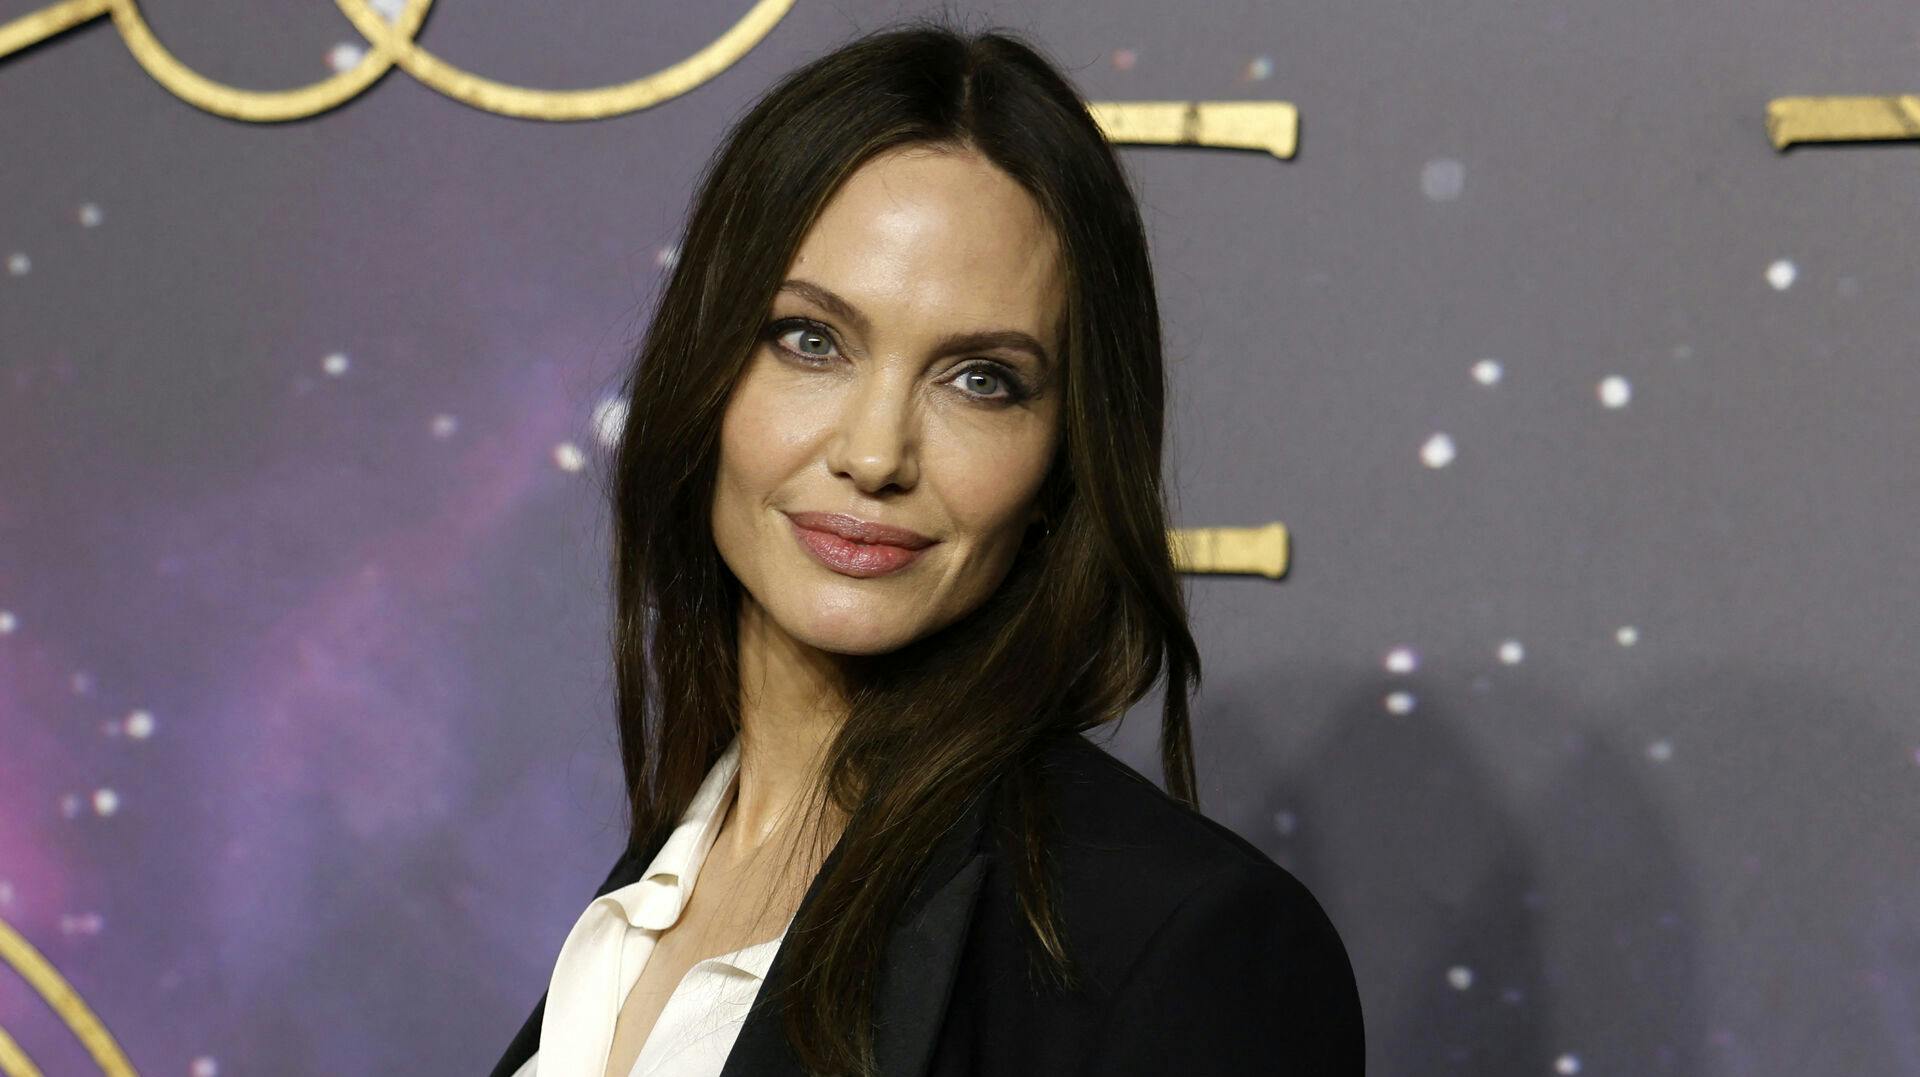 Har Angelina Jolie mon fundet sig en ny flamme?